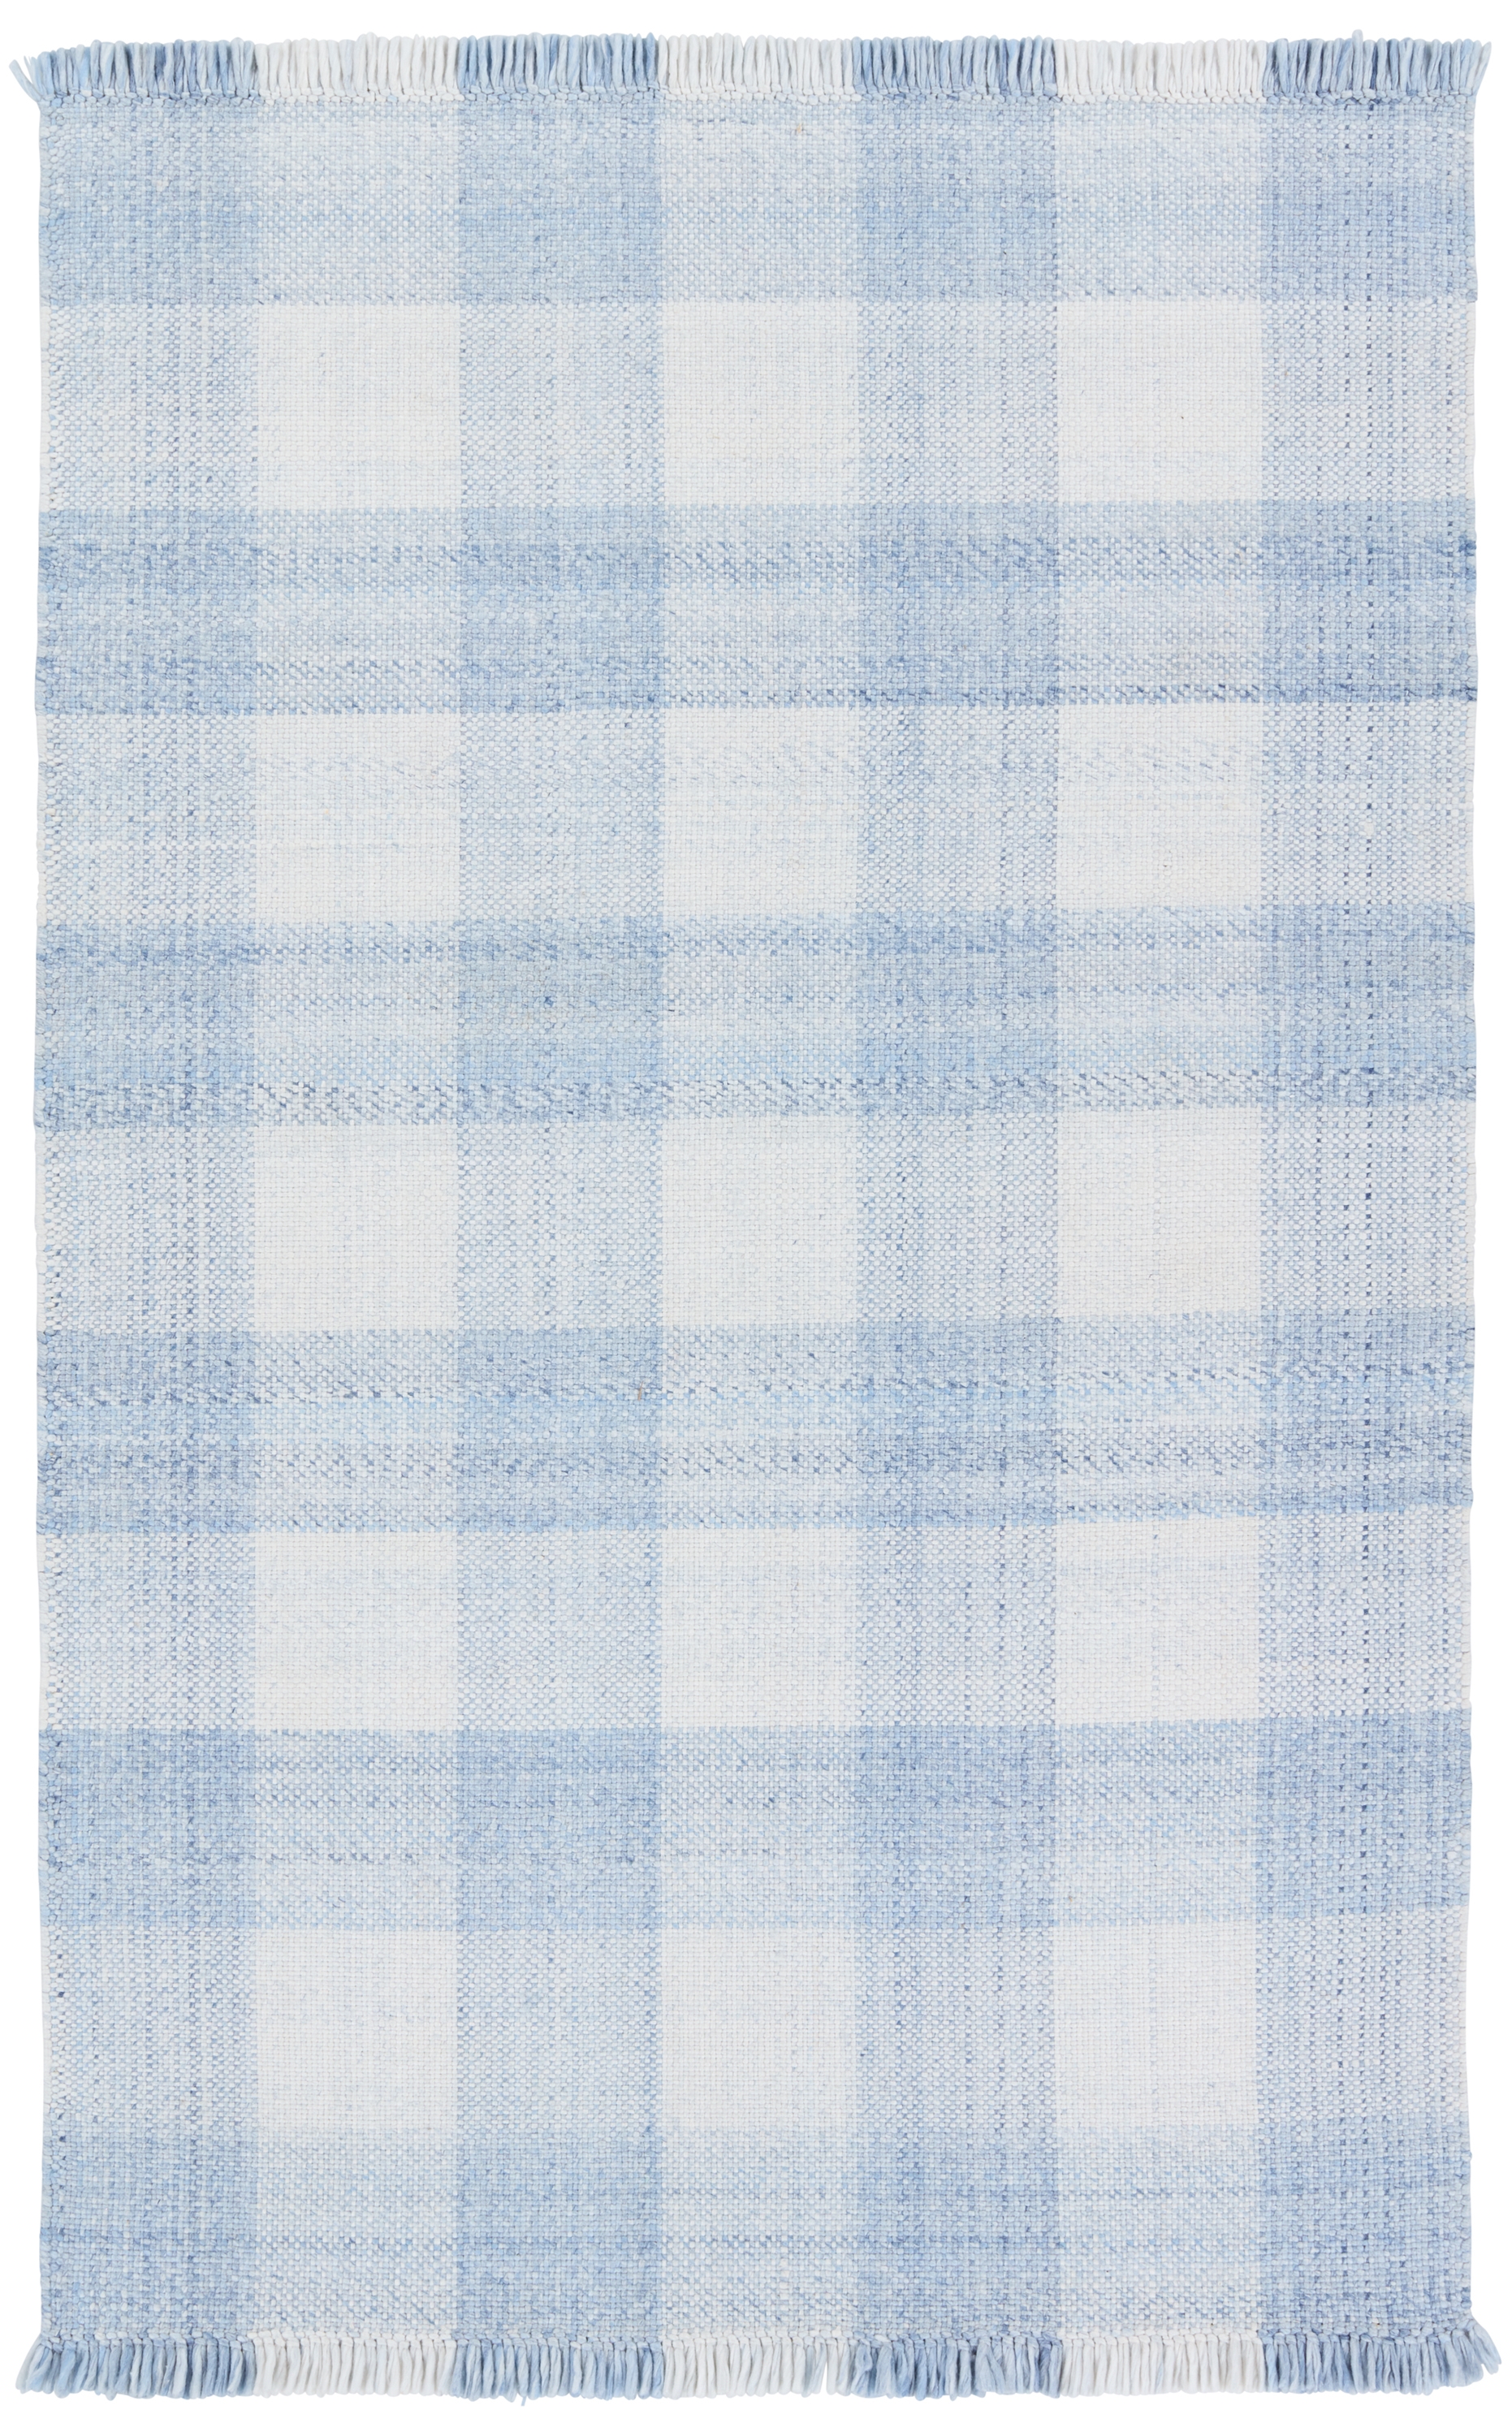 Truce Handmade Indoor/Outdoor Striped Light Blue/ Ivory Area Rug (2'X3') - Image 0